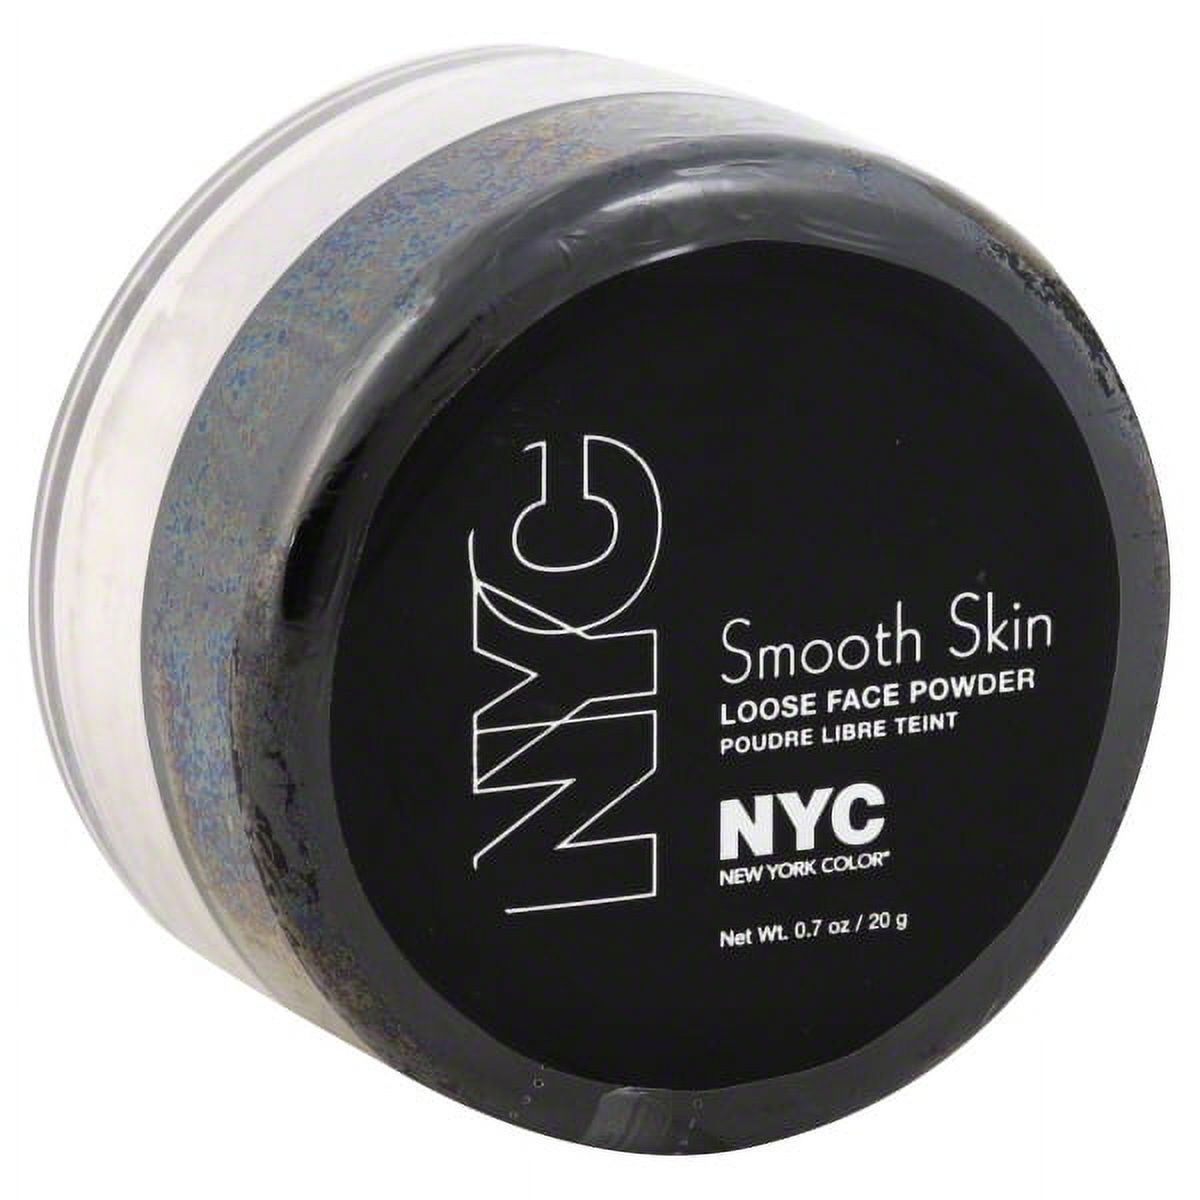 Coty nyc smooth skin face powder, 0.7 oz - image 1 of 2